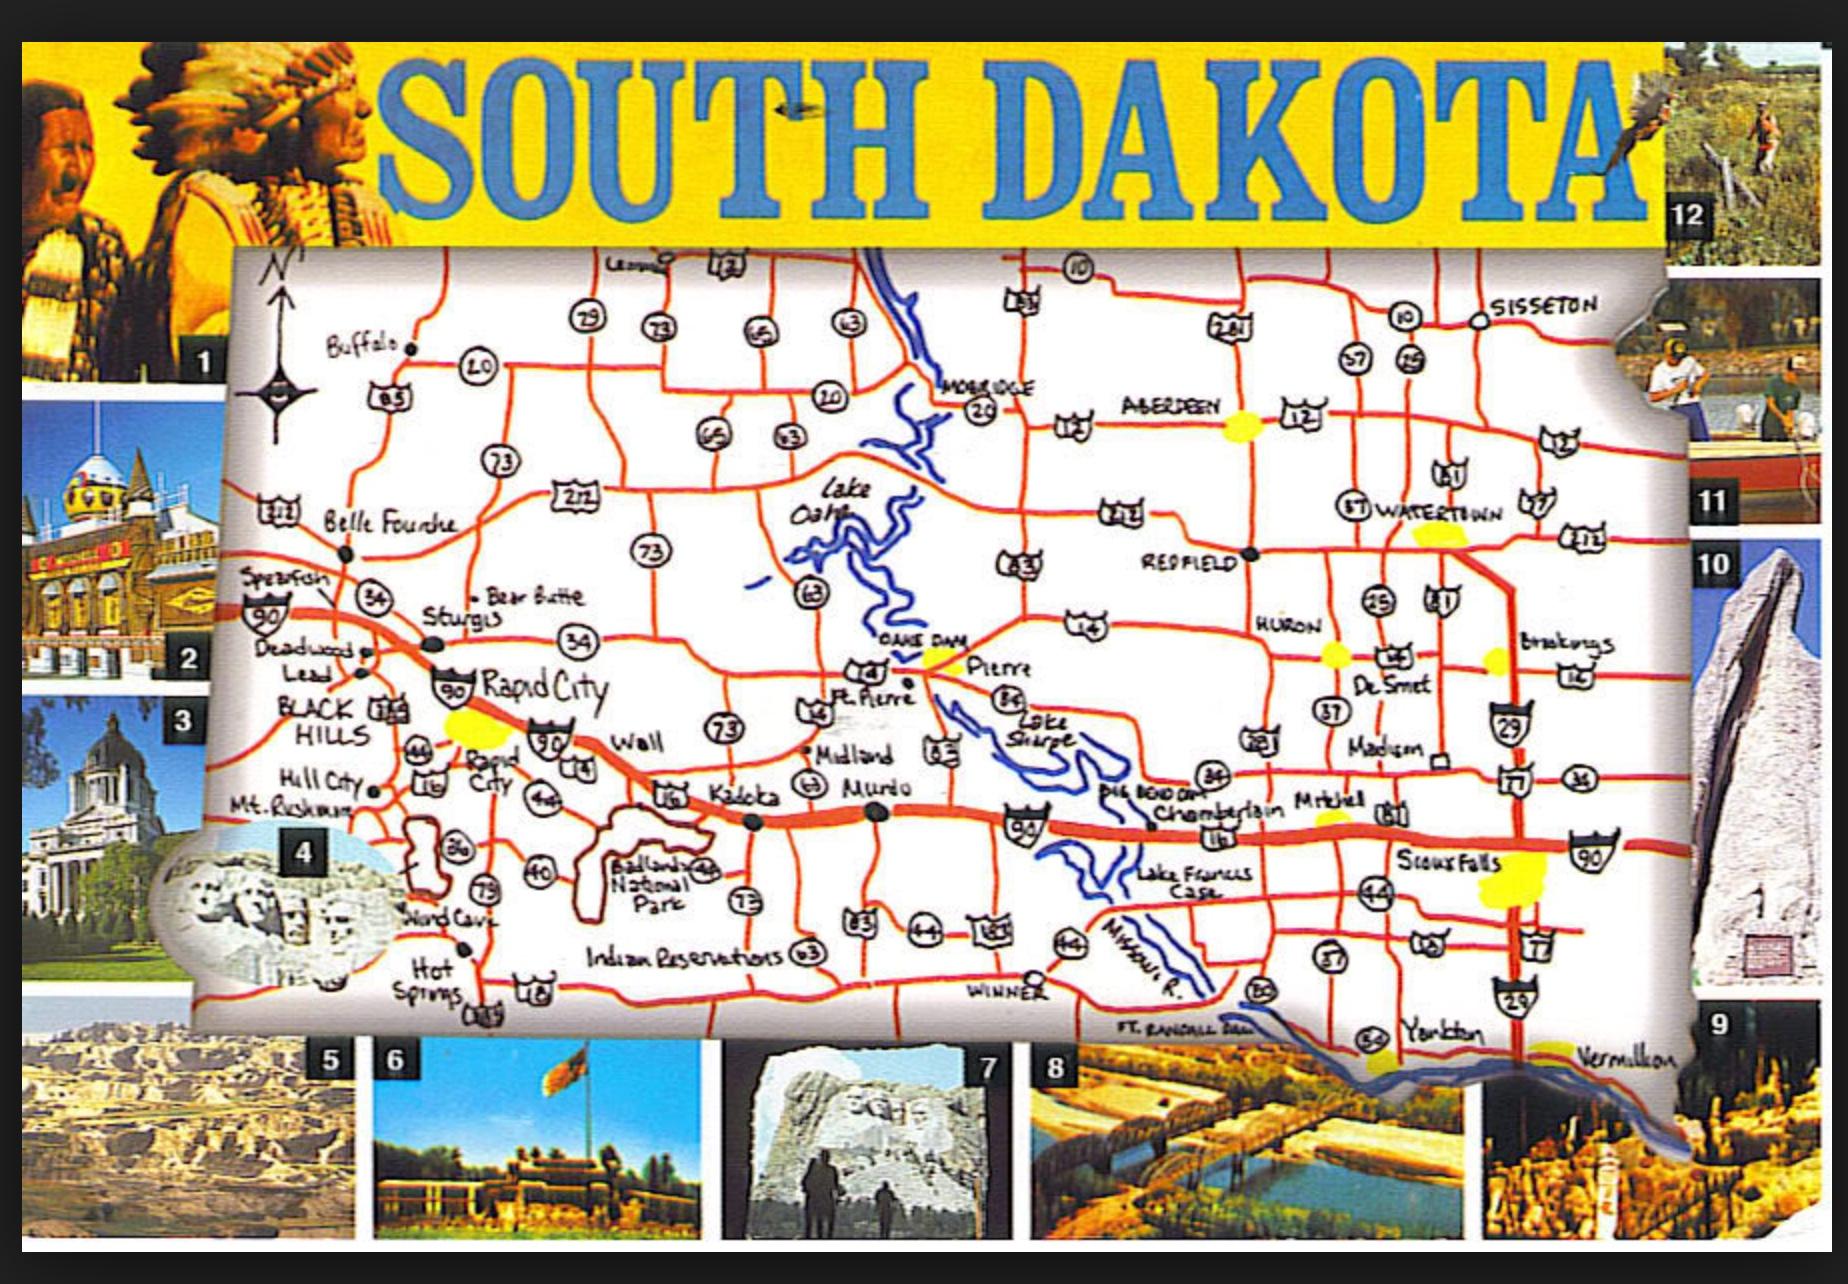 South Dakota Tourist Map South Dakota Tourism Officials Look Forward to A Big Summer | KWIT